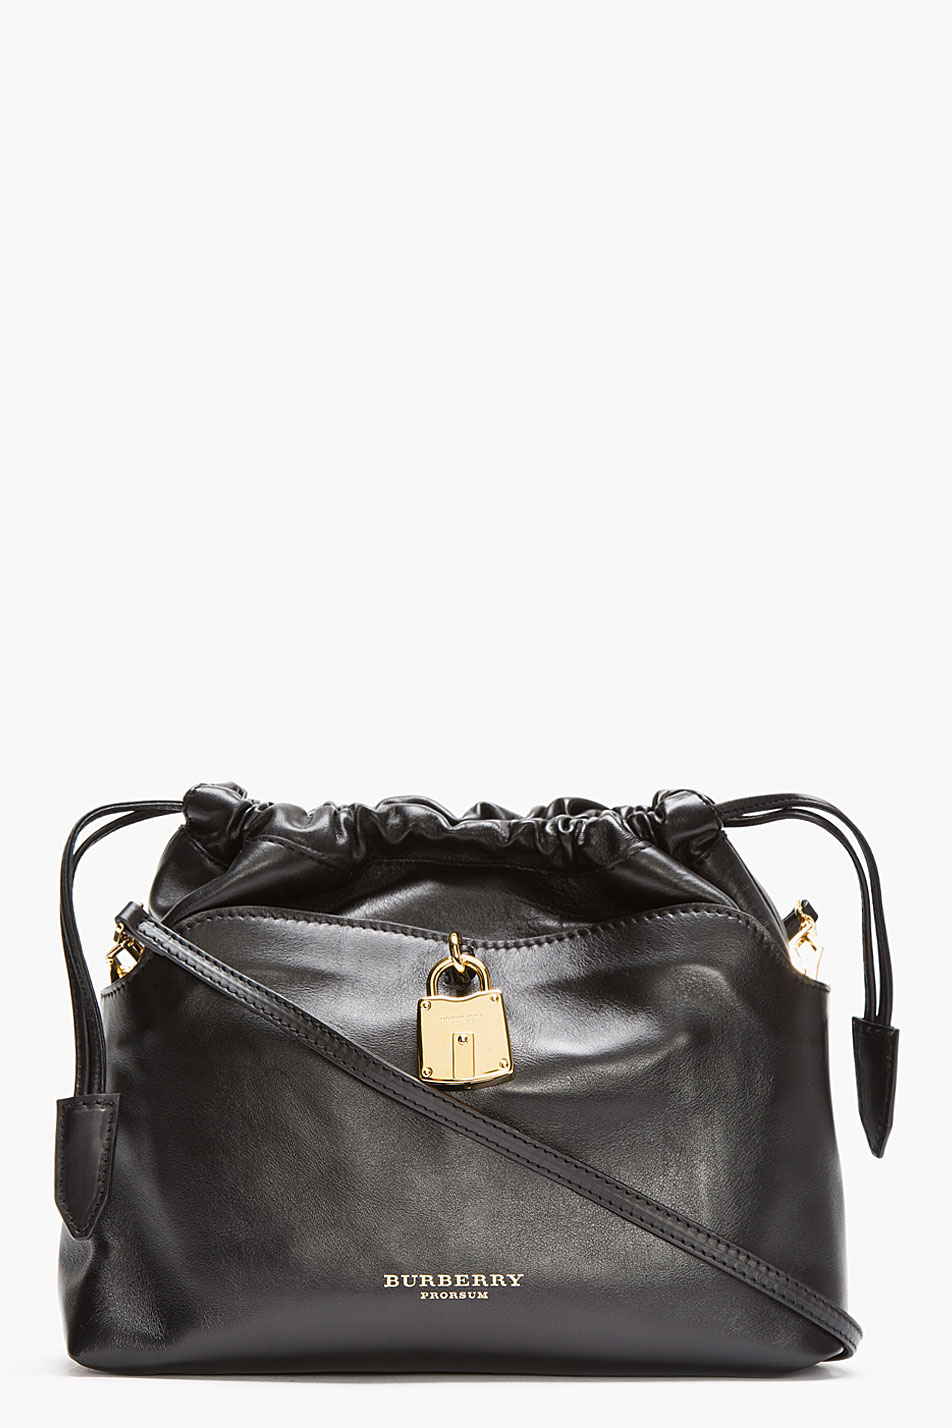 Burberry Prorsum Black Leather Drawstring Shoulder Bag in Black | Lyst